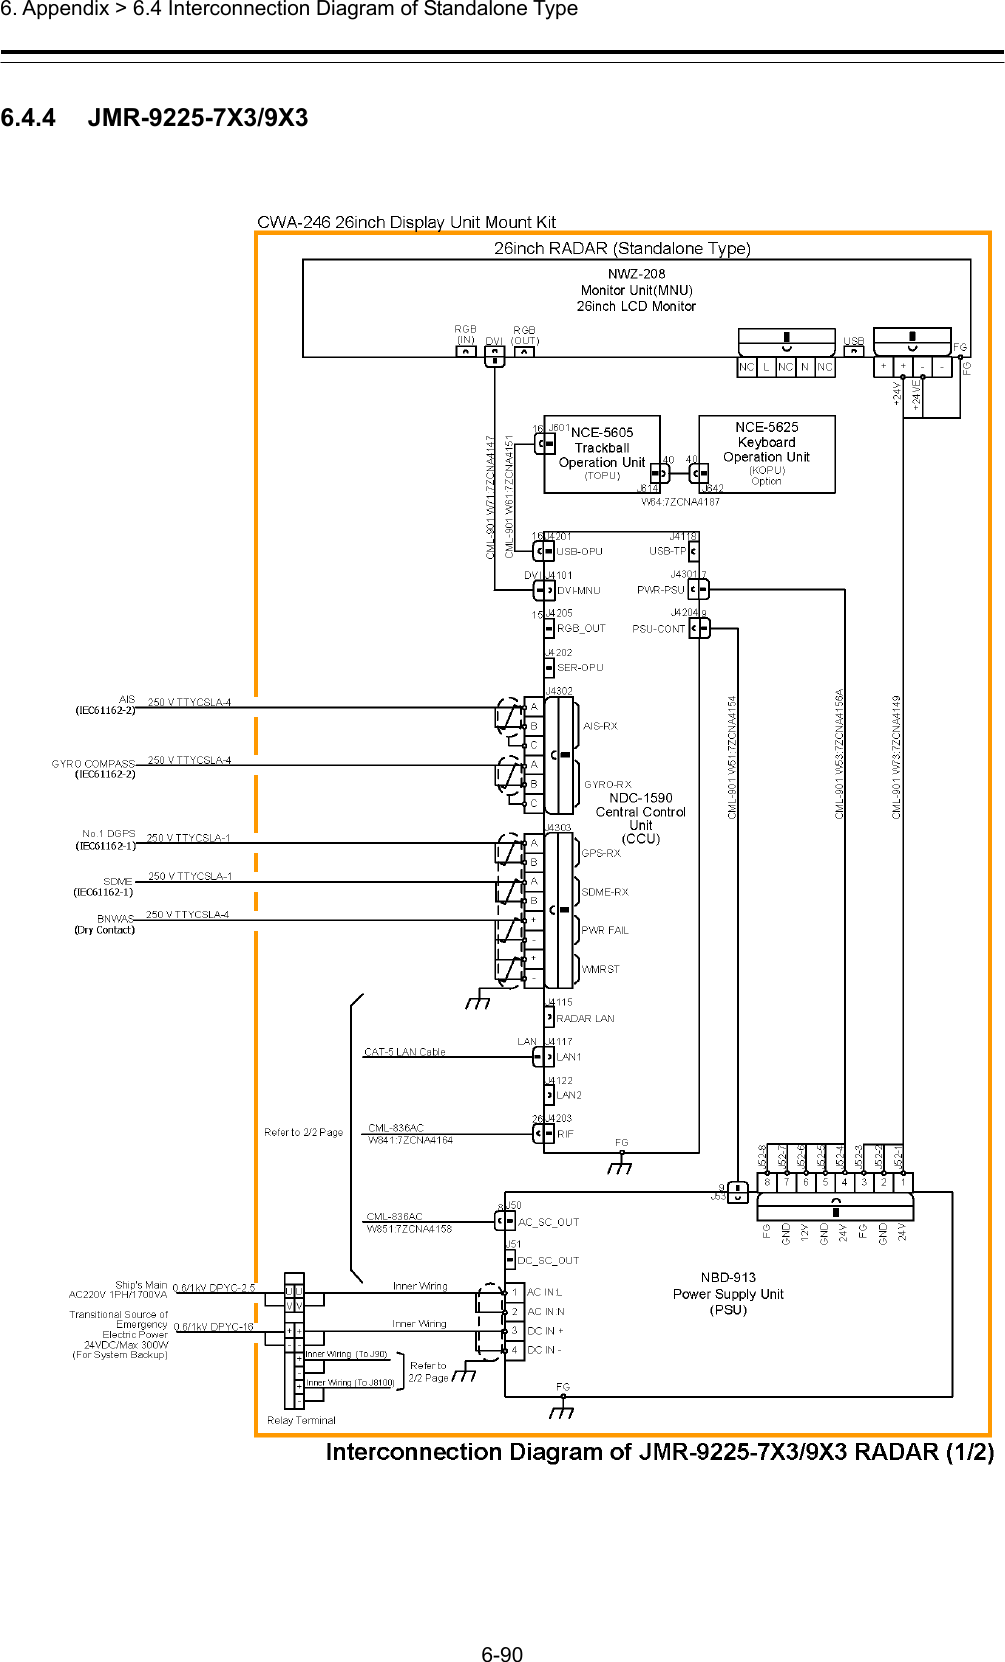  6. Appendix &gt; 6.4 Interconnection Diagram of Standalone Type 6-90  6.4.4   JMR-9225-7X3/9X3 